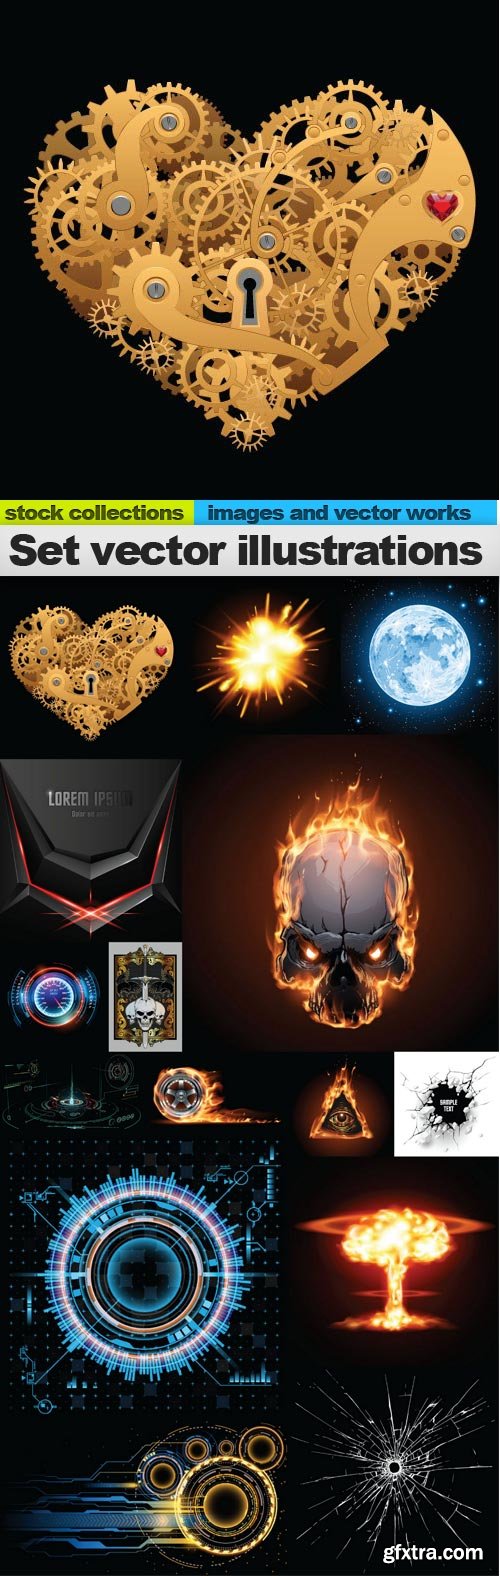 Set vector illustrations, 15 x EPS